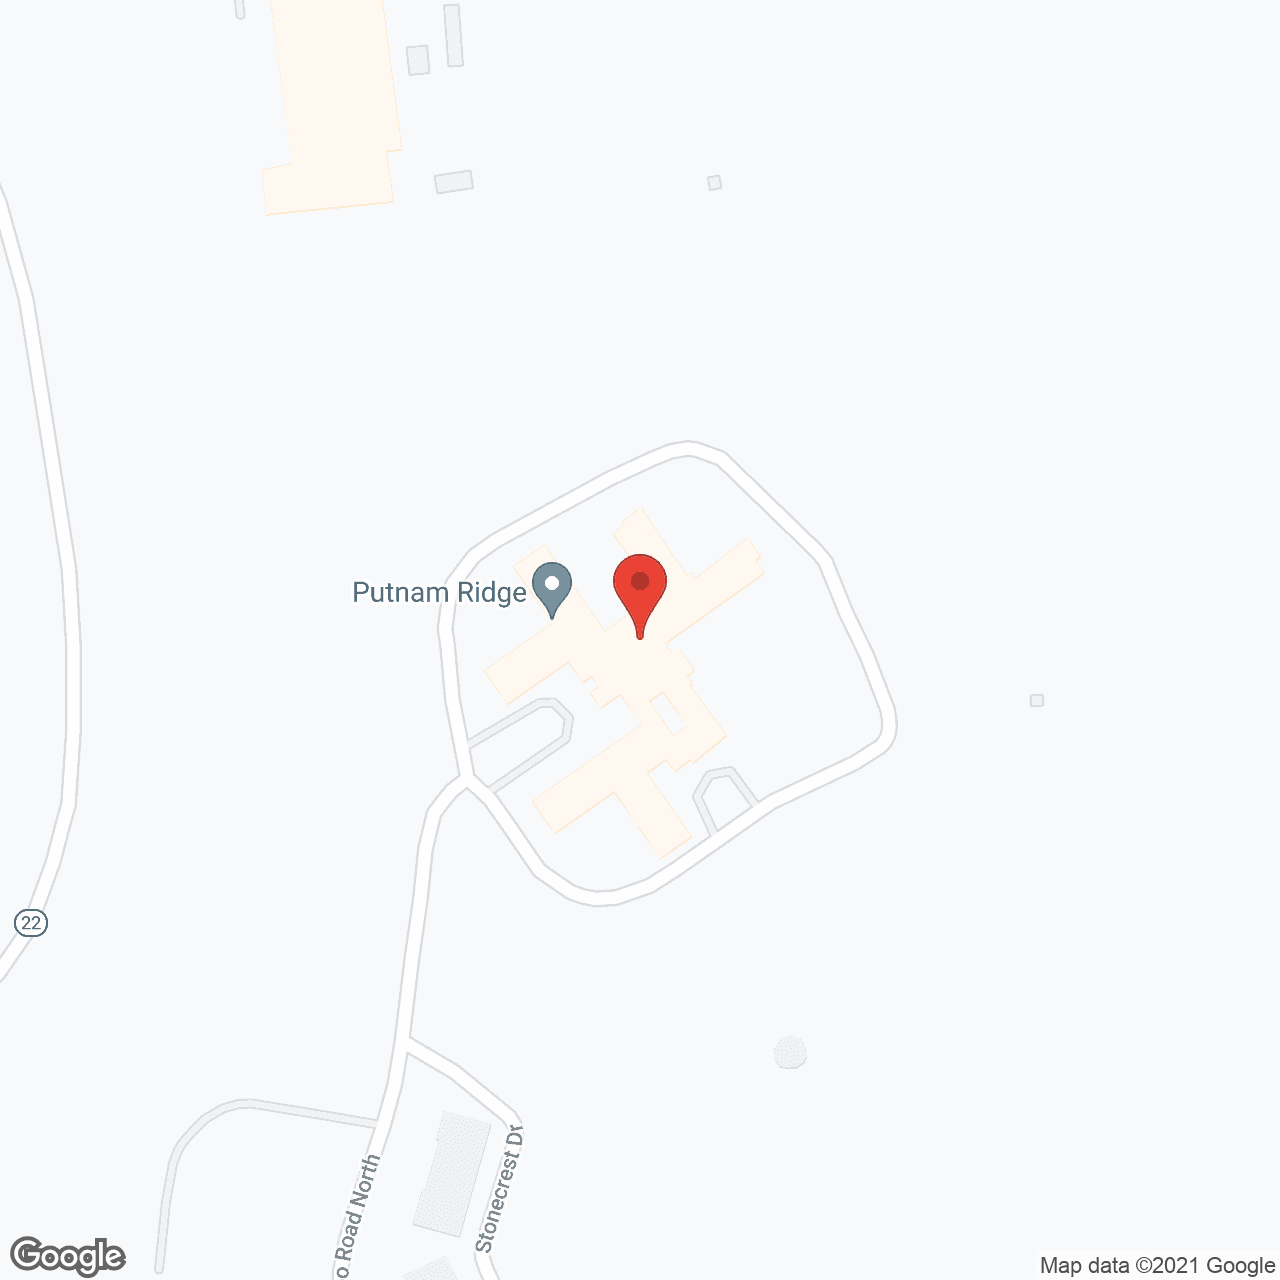 Putnam Ridge in google map